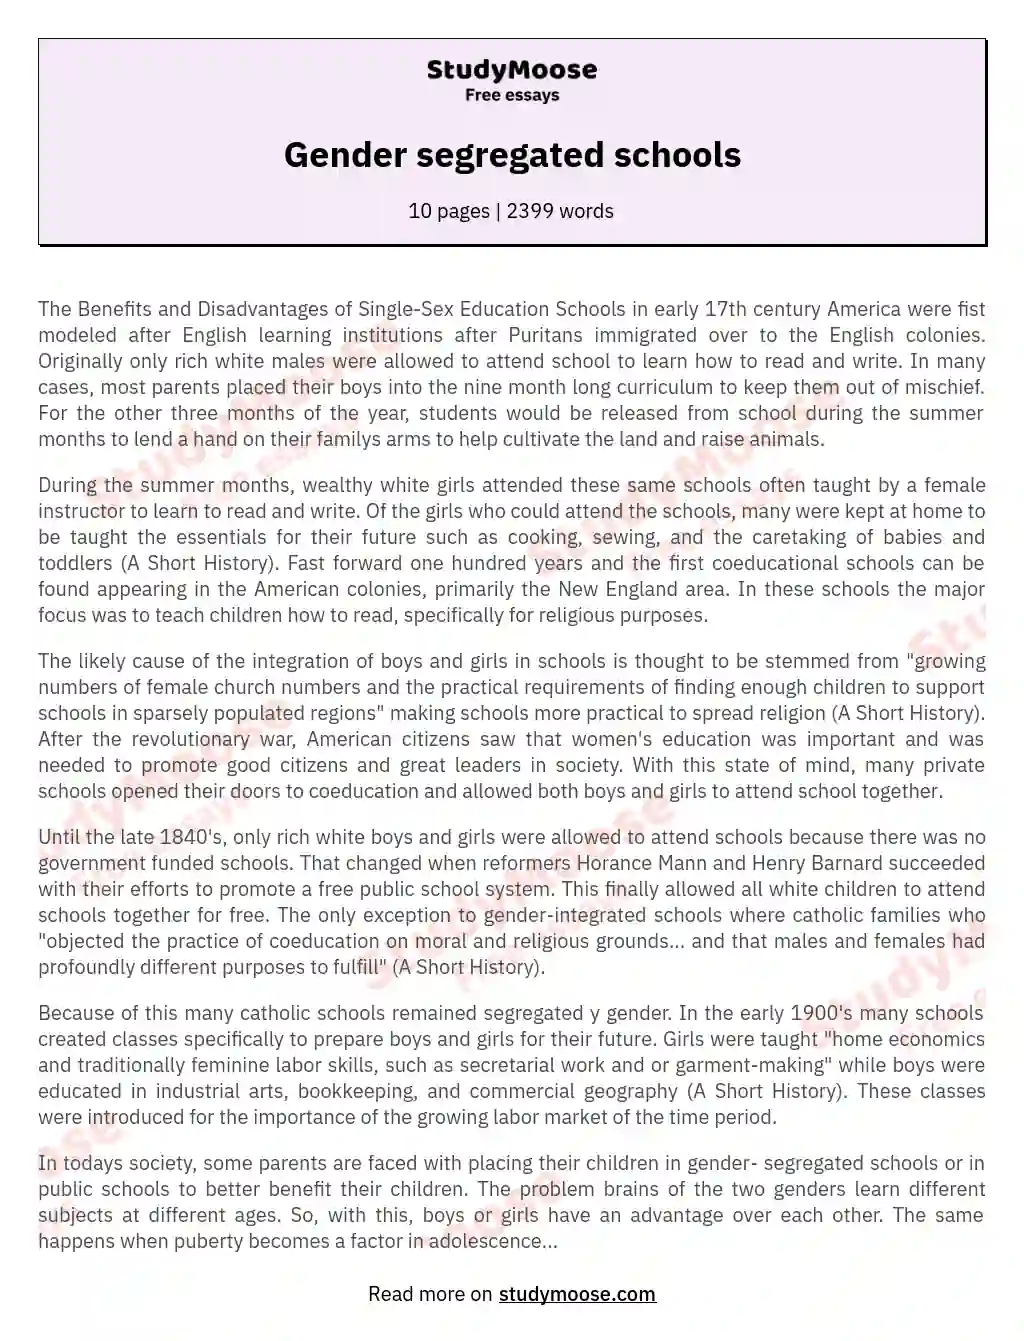 Gender segregated schools essay